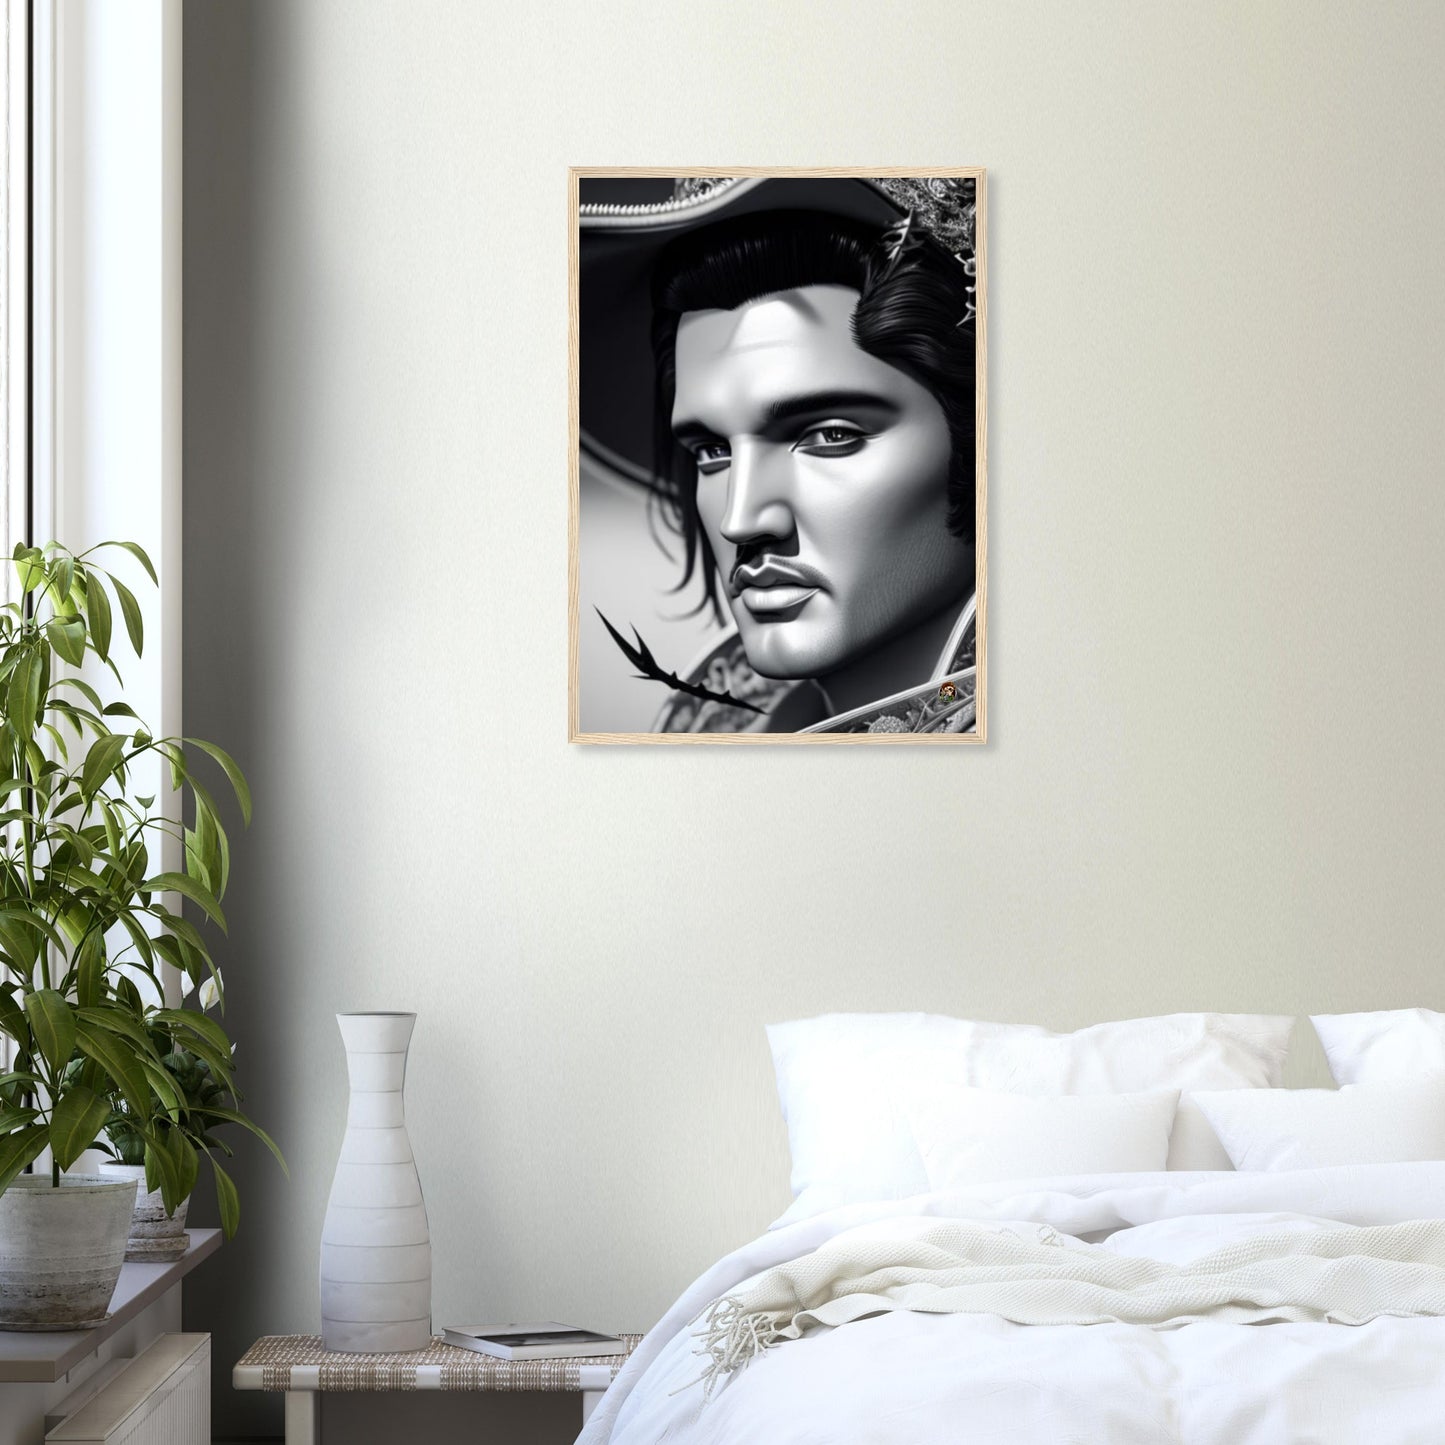 Elvis Presley Premium Semi-Glossy Wooden Framed Poster. created by Ötzi Frosty